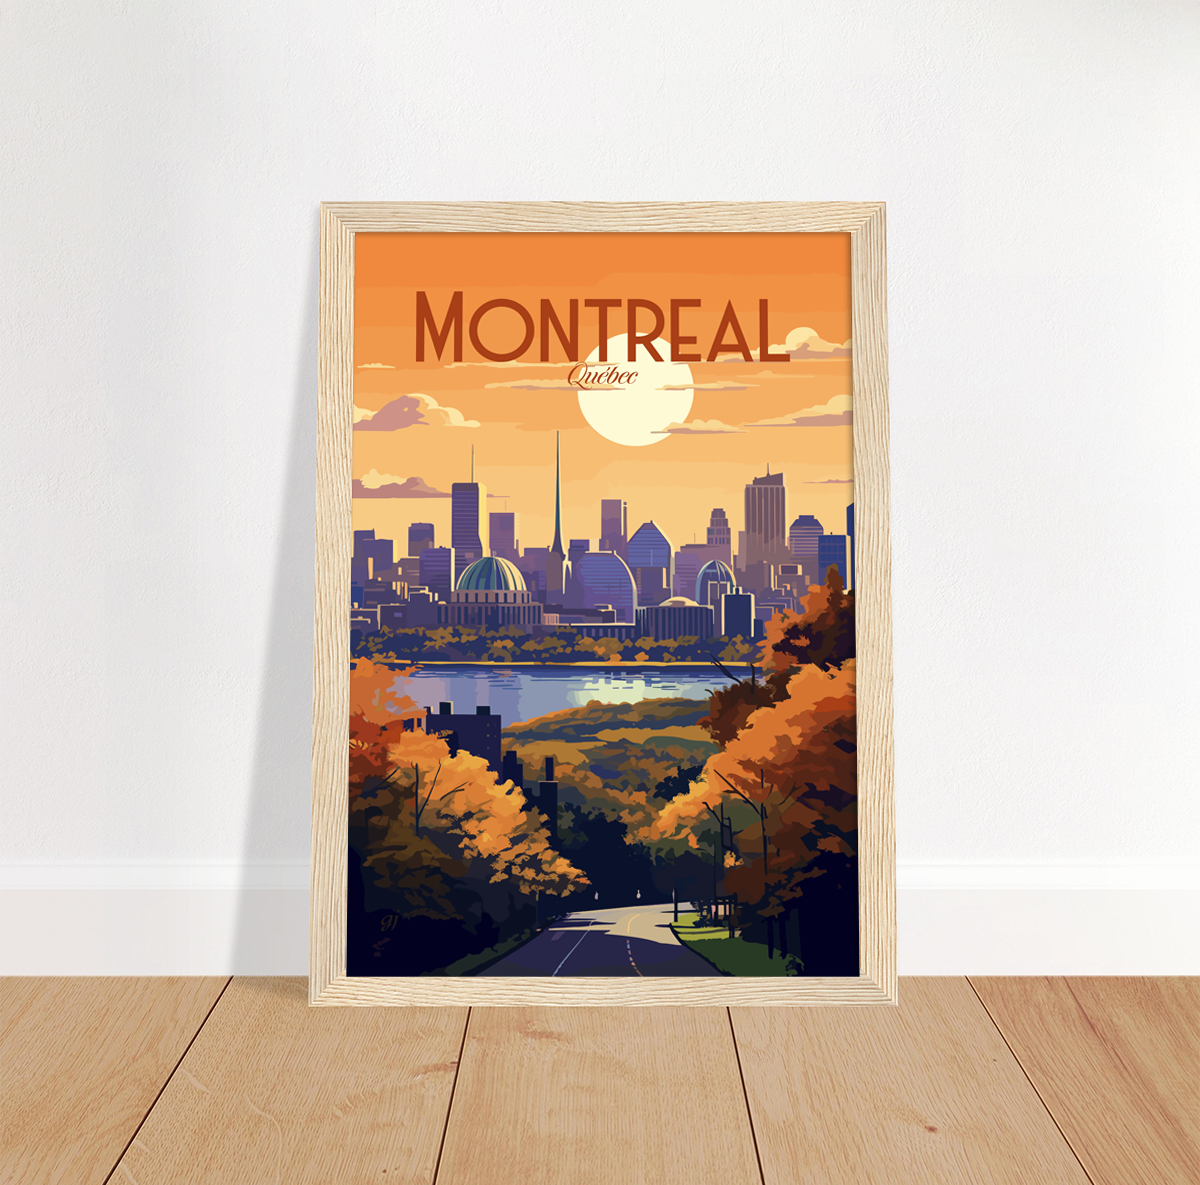 Montreal poster by bon voyage design